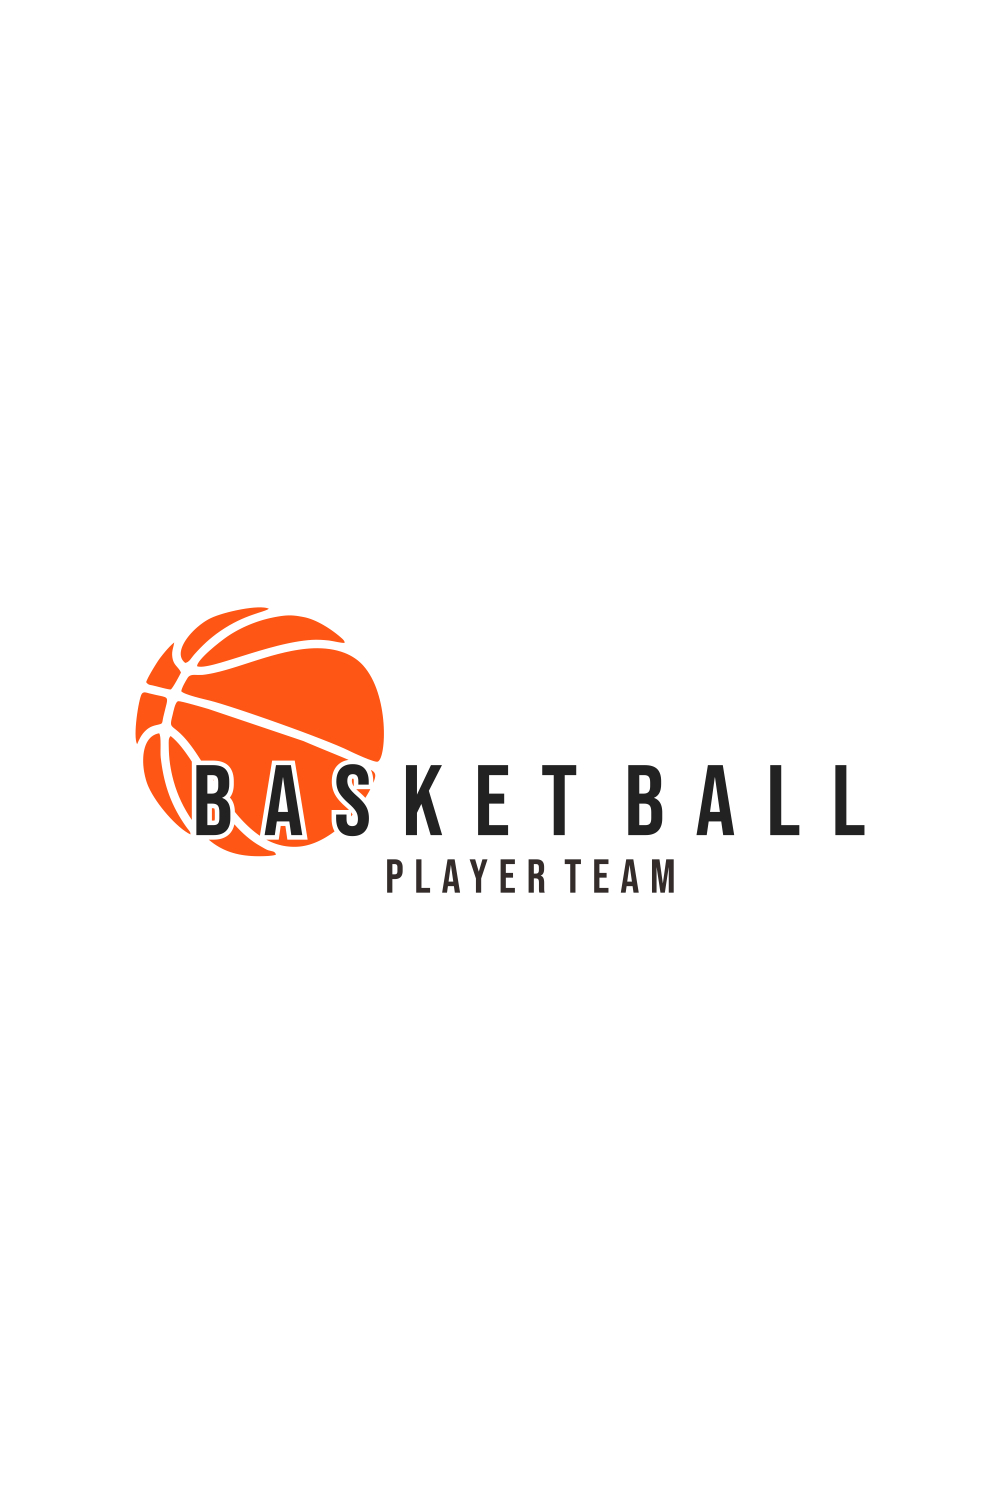 Basketball logo design template vector pinterest preview image.